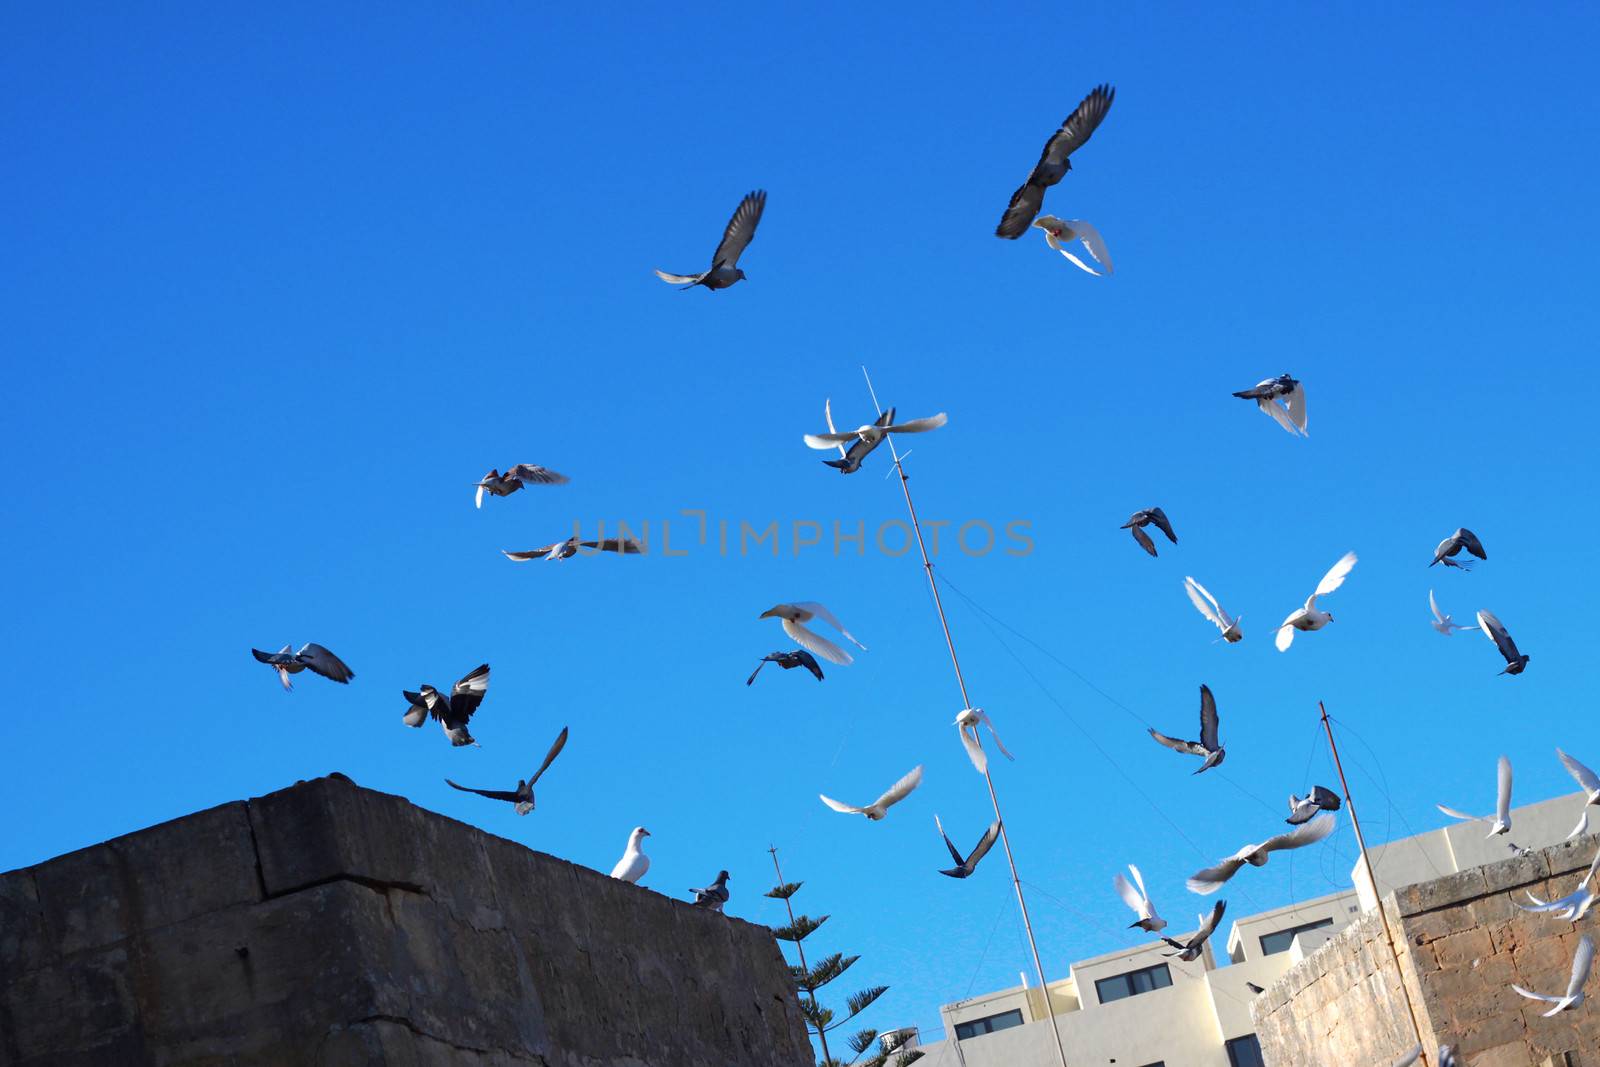 A flock of doves taken off over roof tops